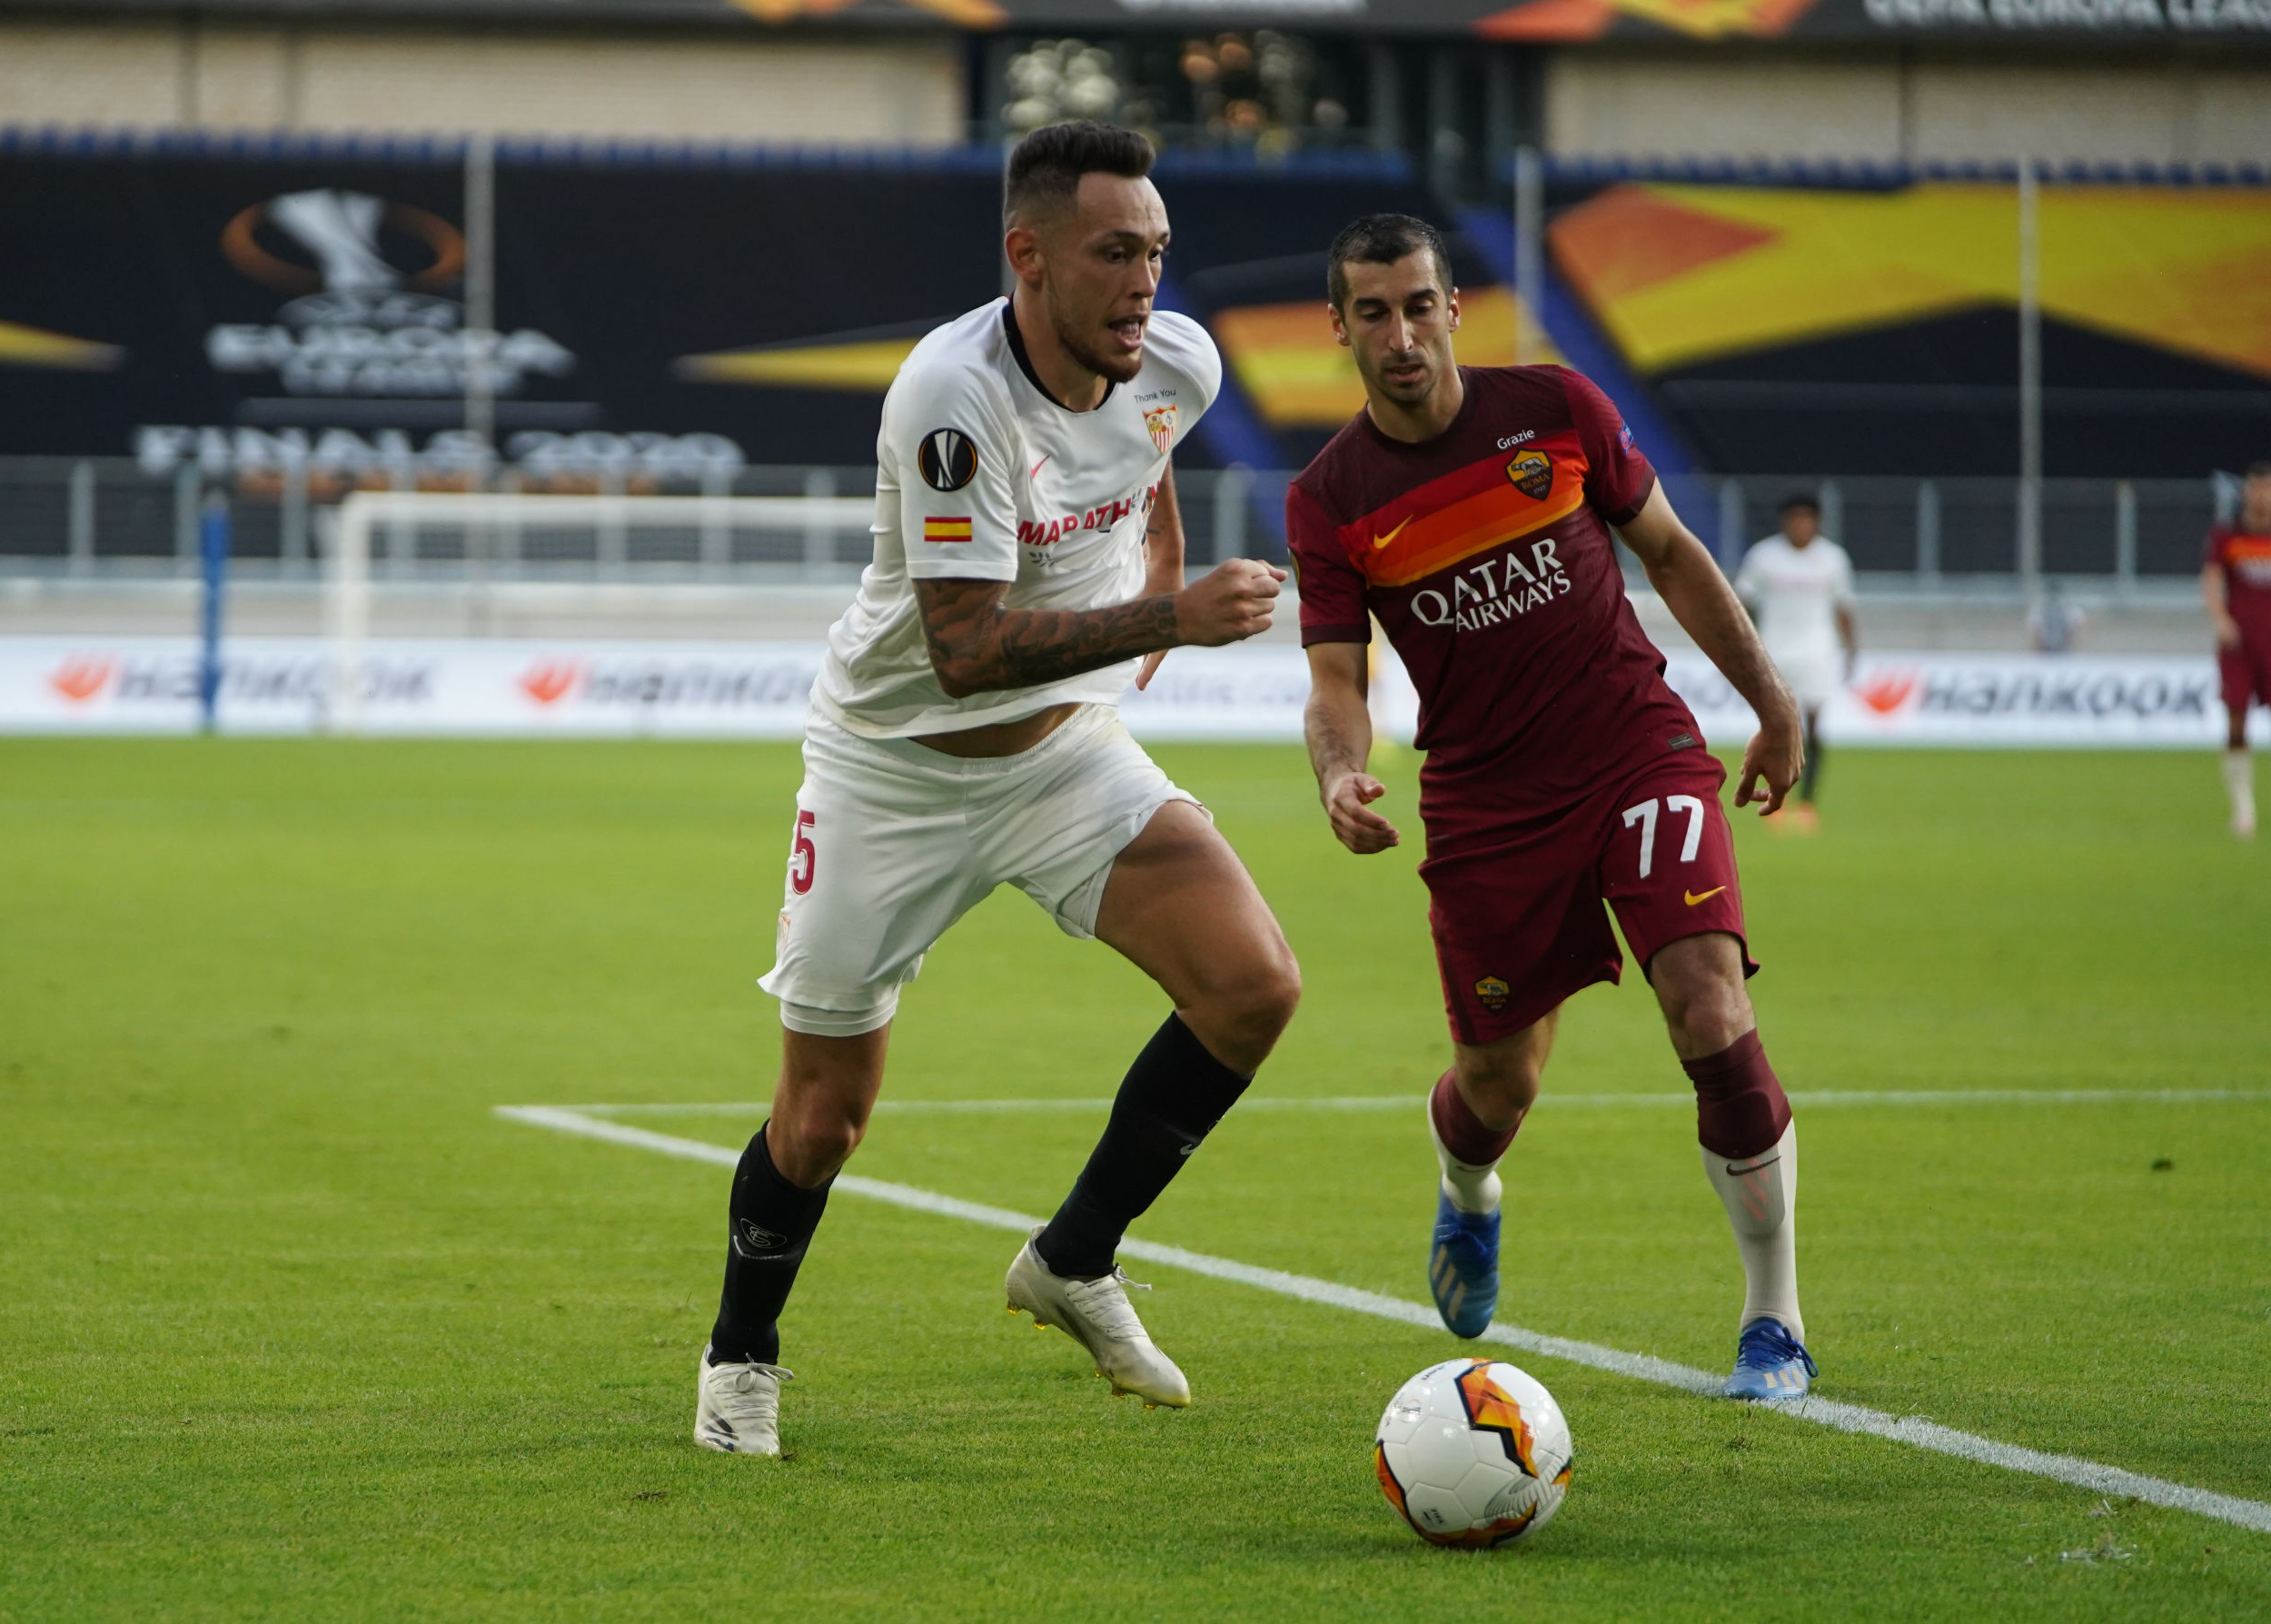 Ocampos against Mkhitaryan in the Europa League last season